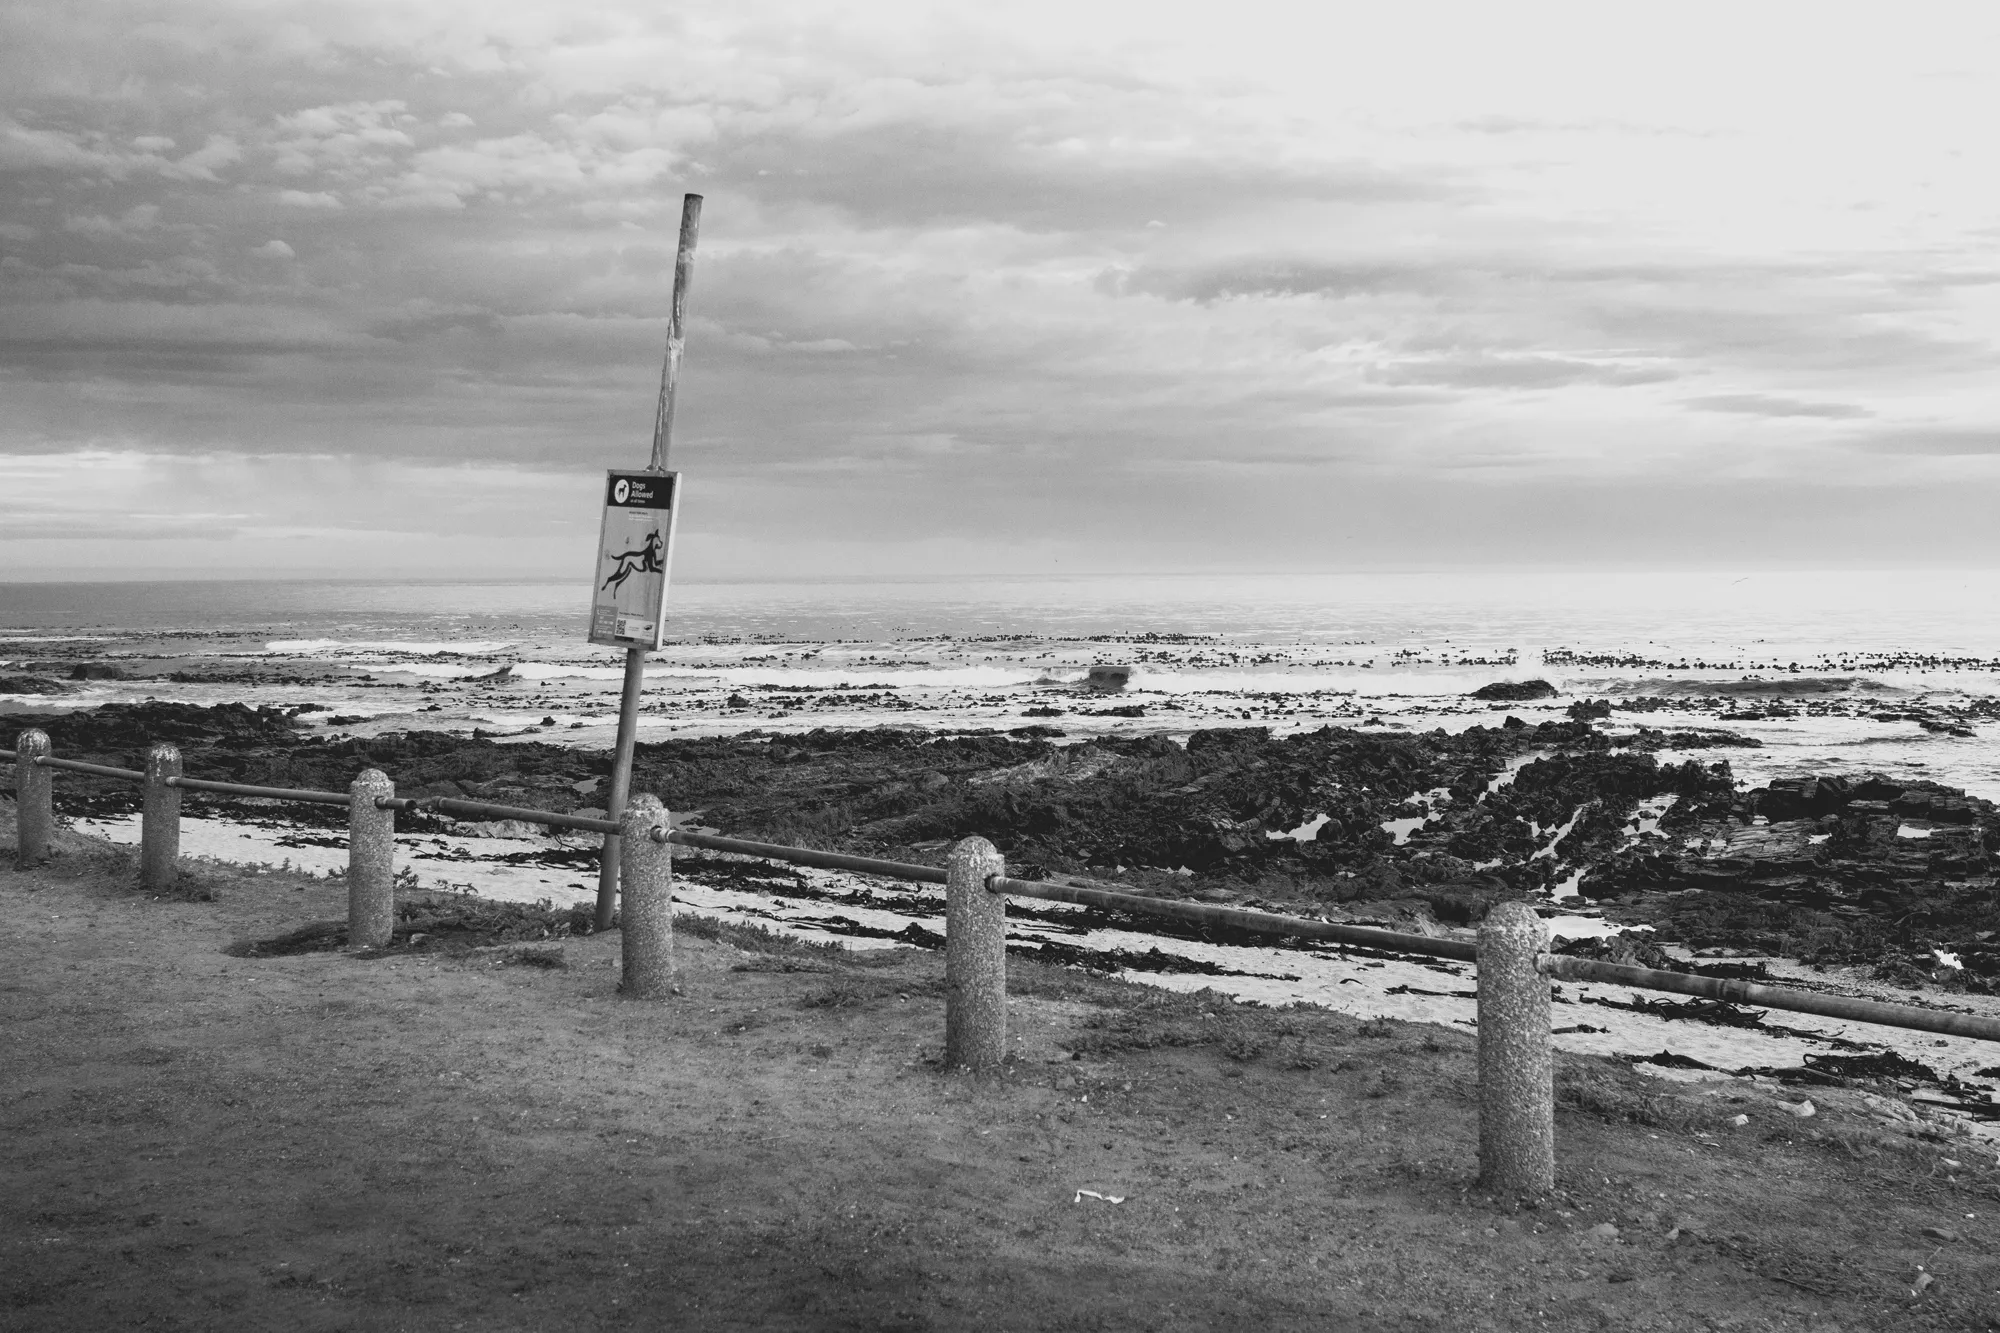 2022-02-13 - Cape Town - The ocean behind cement railings